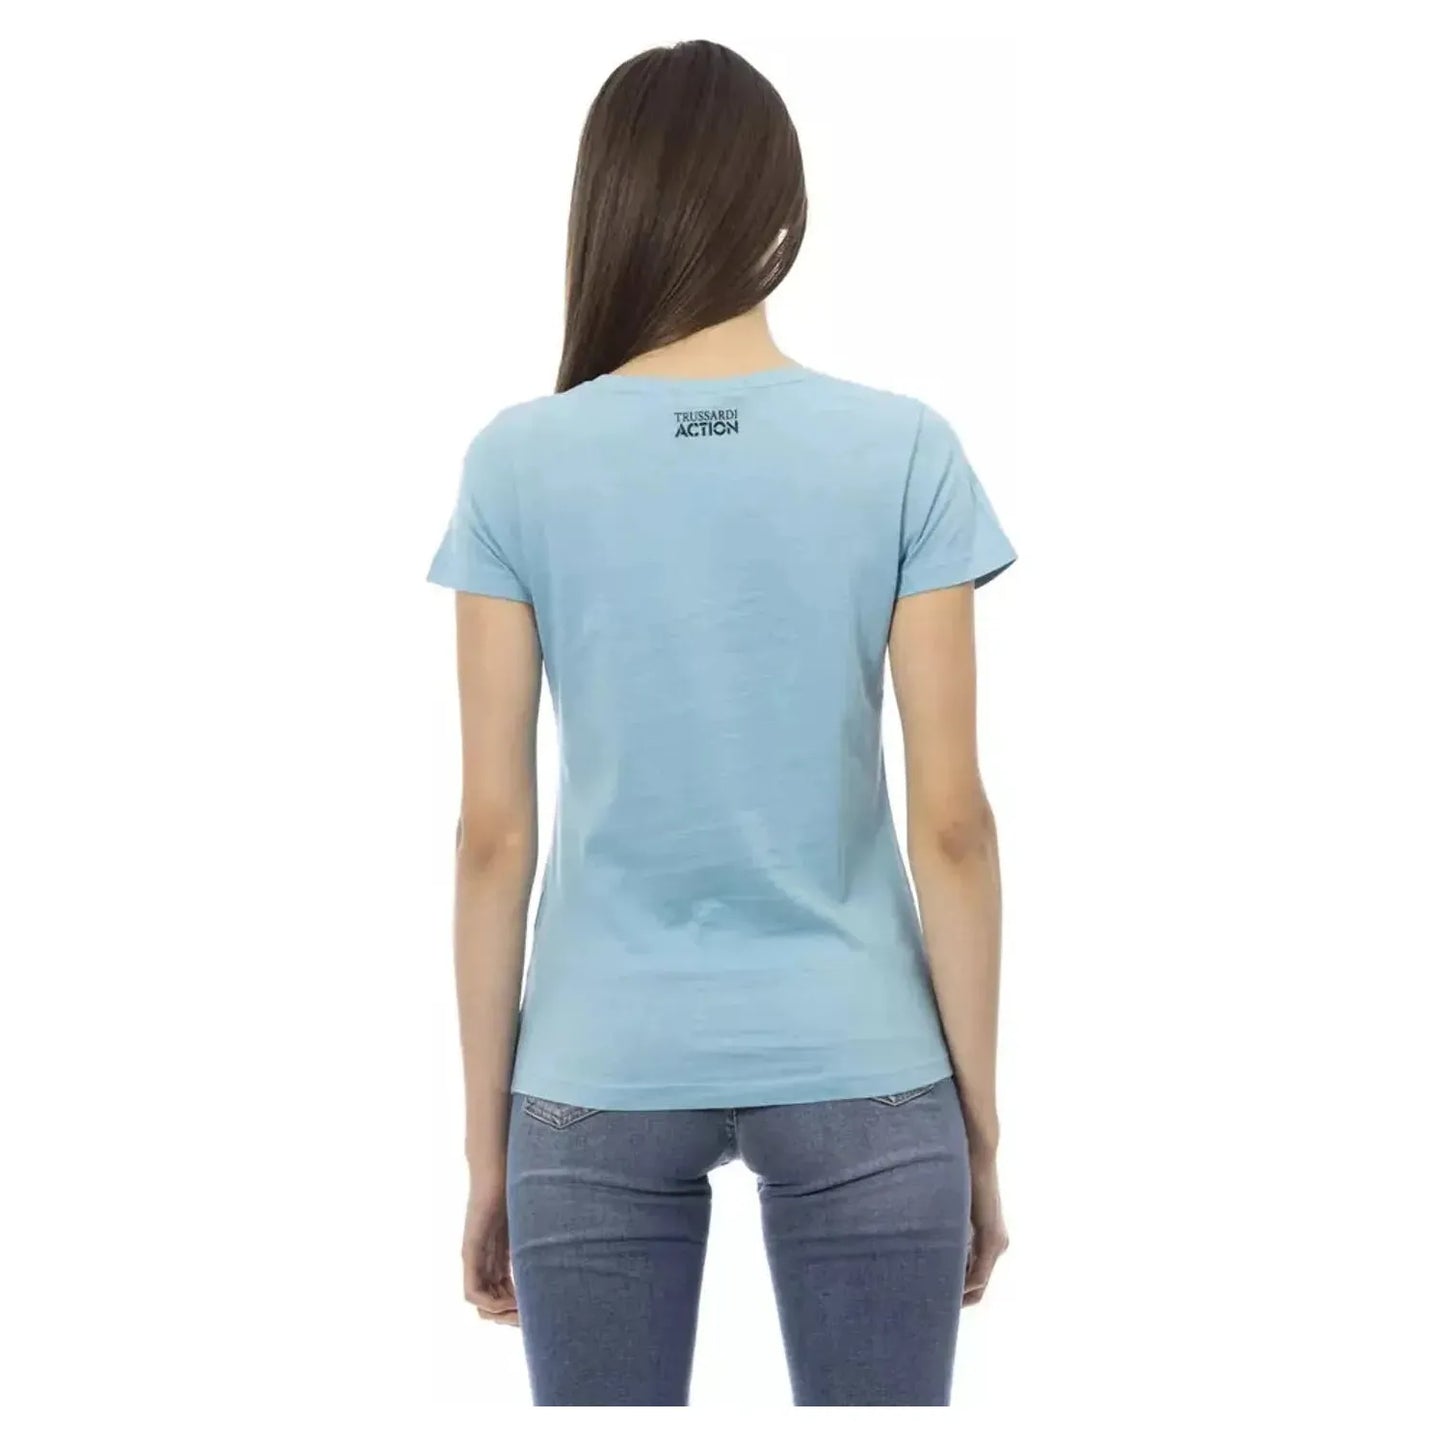 Trussardi Action Chic Light Blue Short Sleeve Tee with Print light-blue-cotton-tops-t-shirt-14